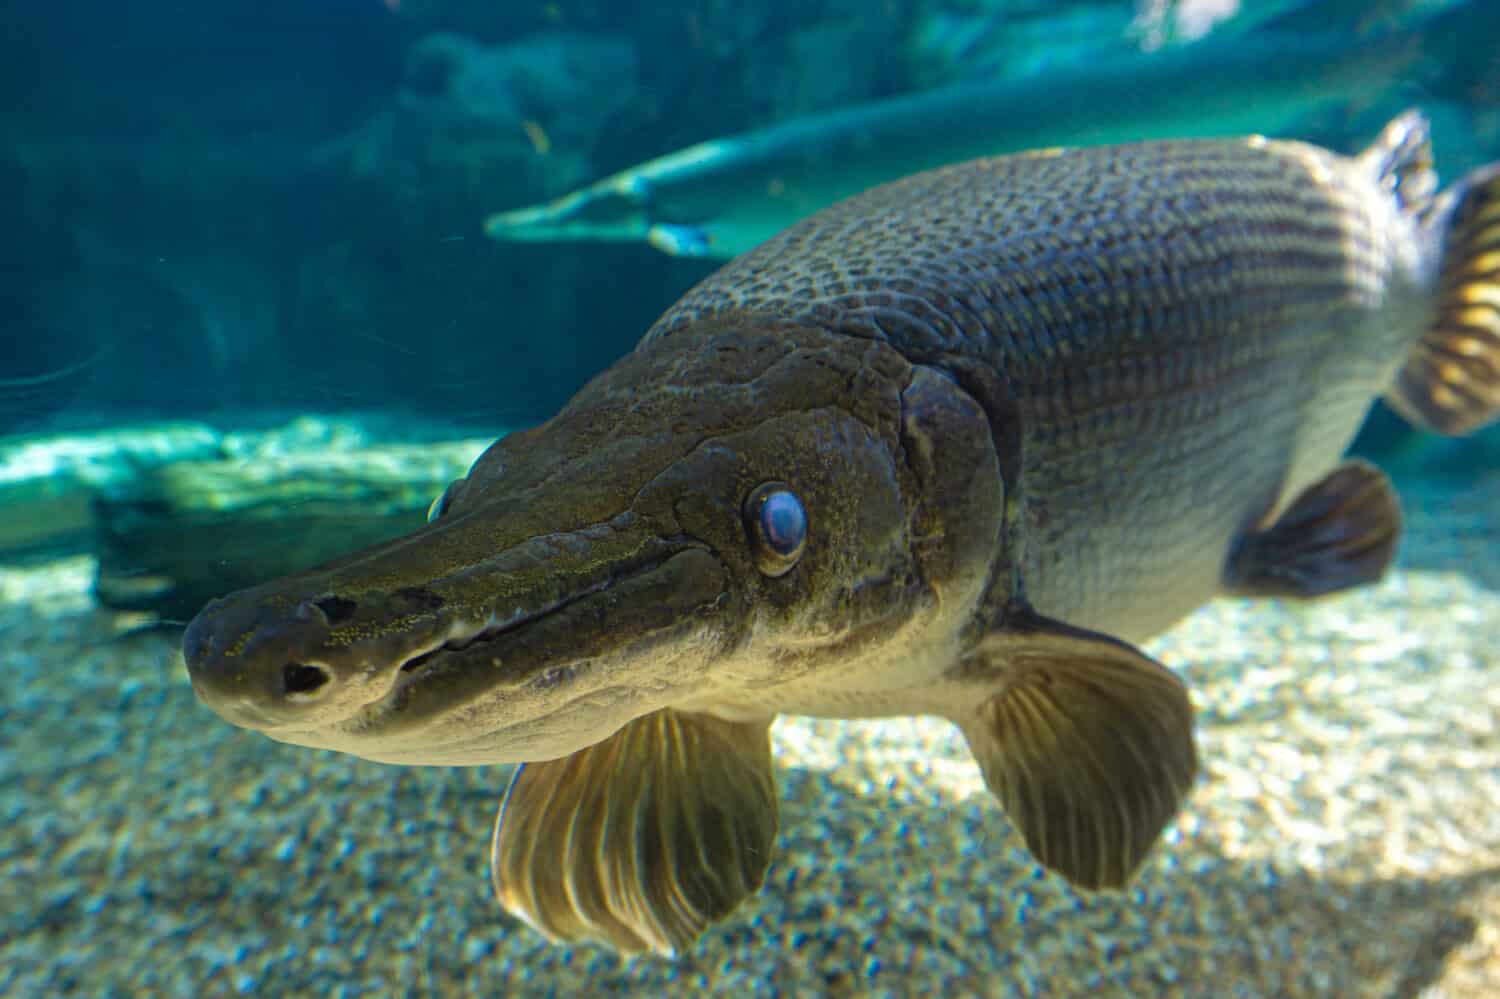 The Alligator Gar: North America's Largest Freshwater Predatory Fish